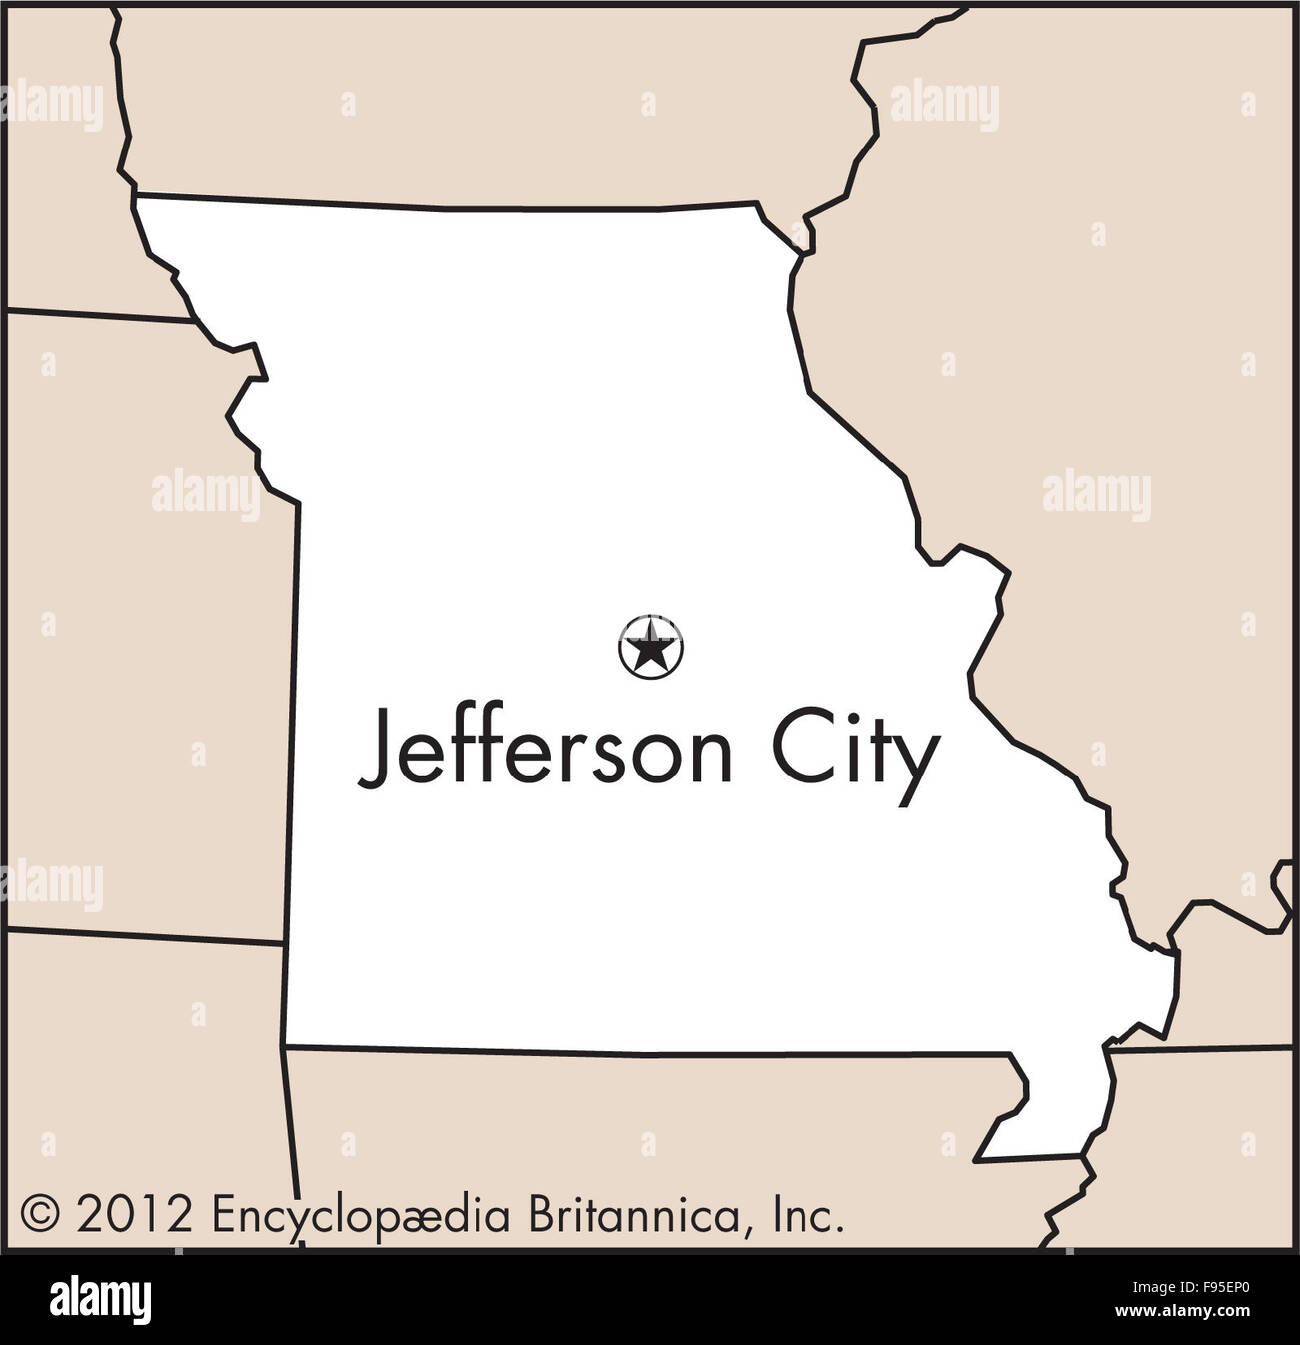 Jefferson City, Missouri, United States Stock Photo